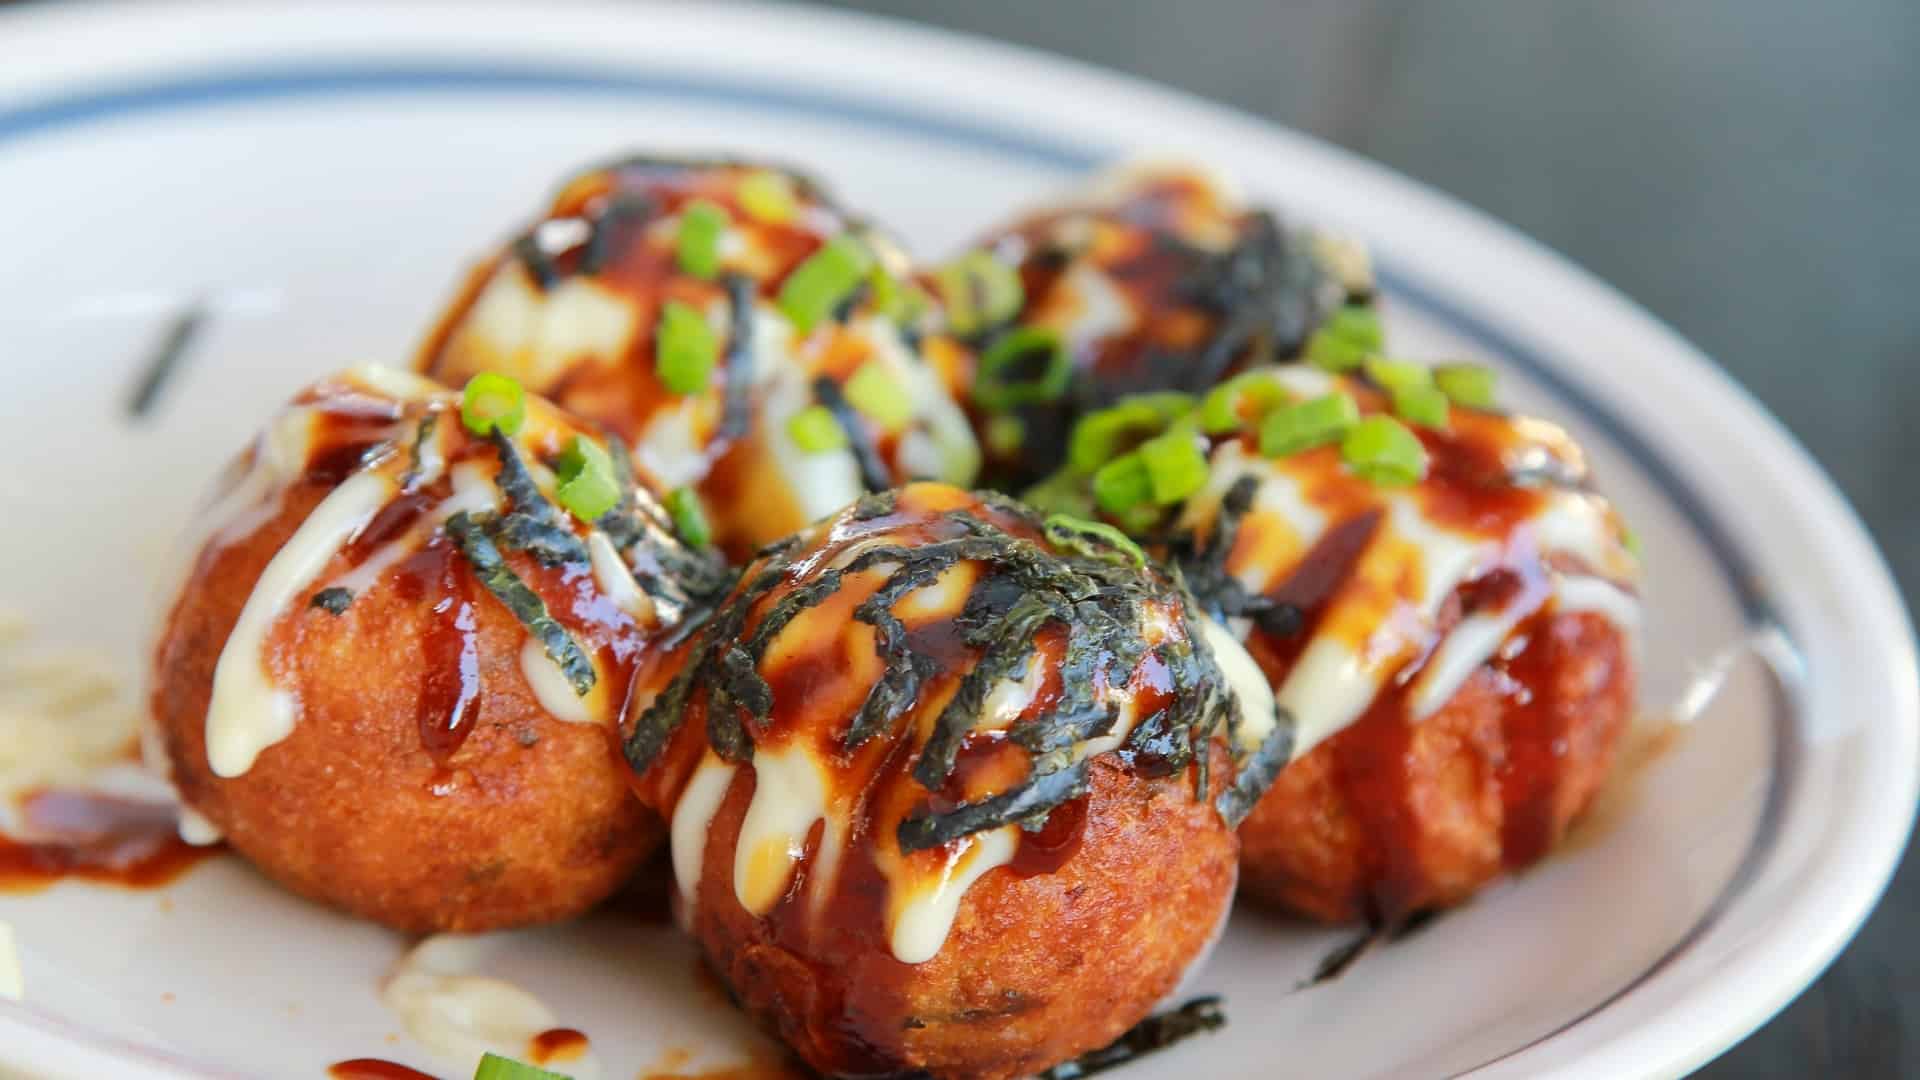 How to make takoyaki without a pan